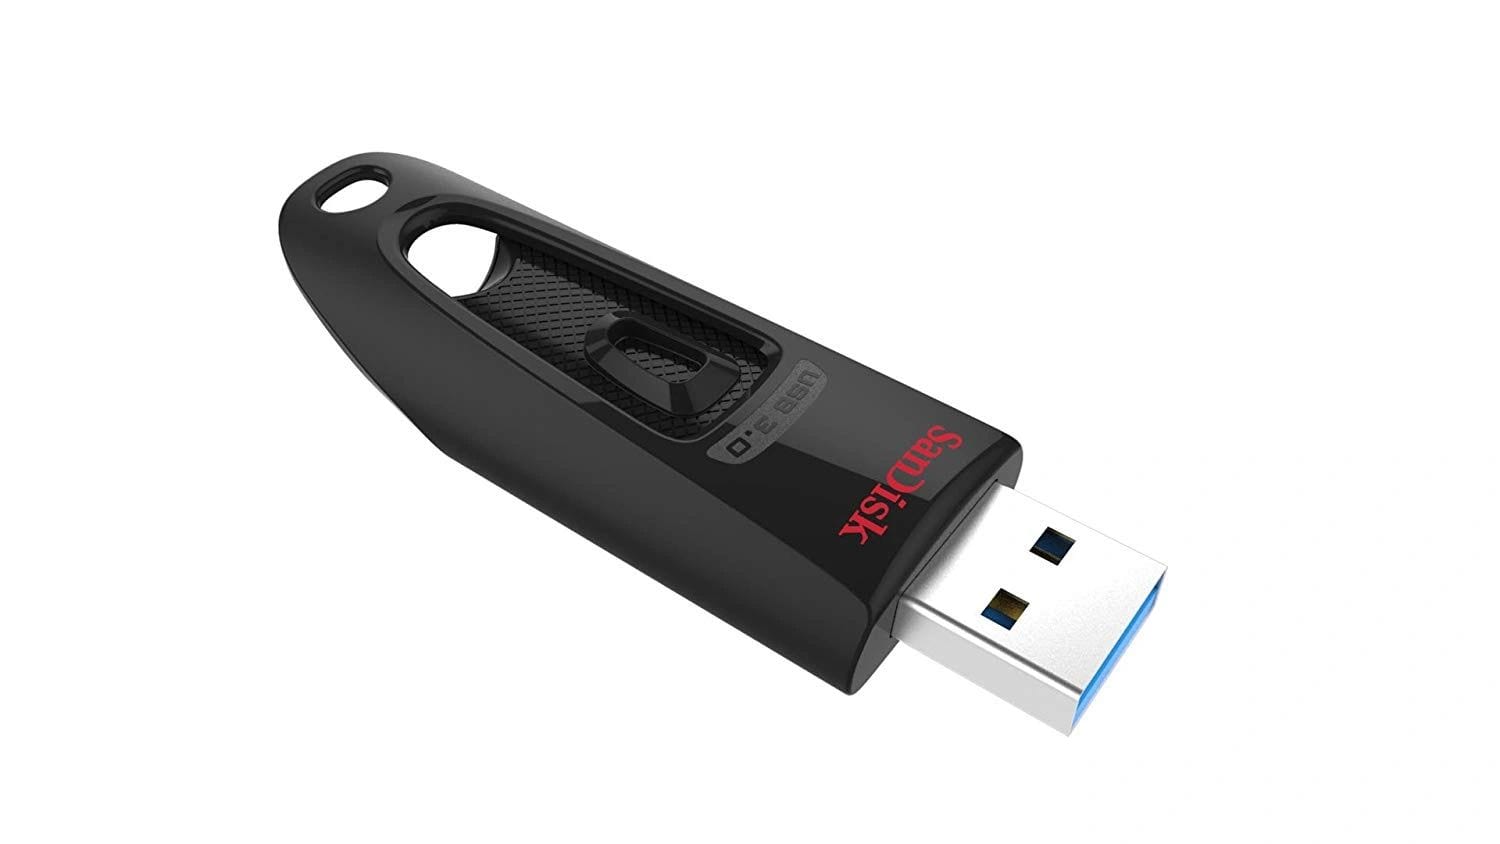 SanDisk Ultra USB 3.0 32 GB Flash Drive SDCZ48 32GB PENDRIVE-Memory Cards-dealsplant